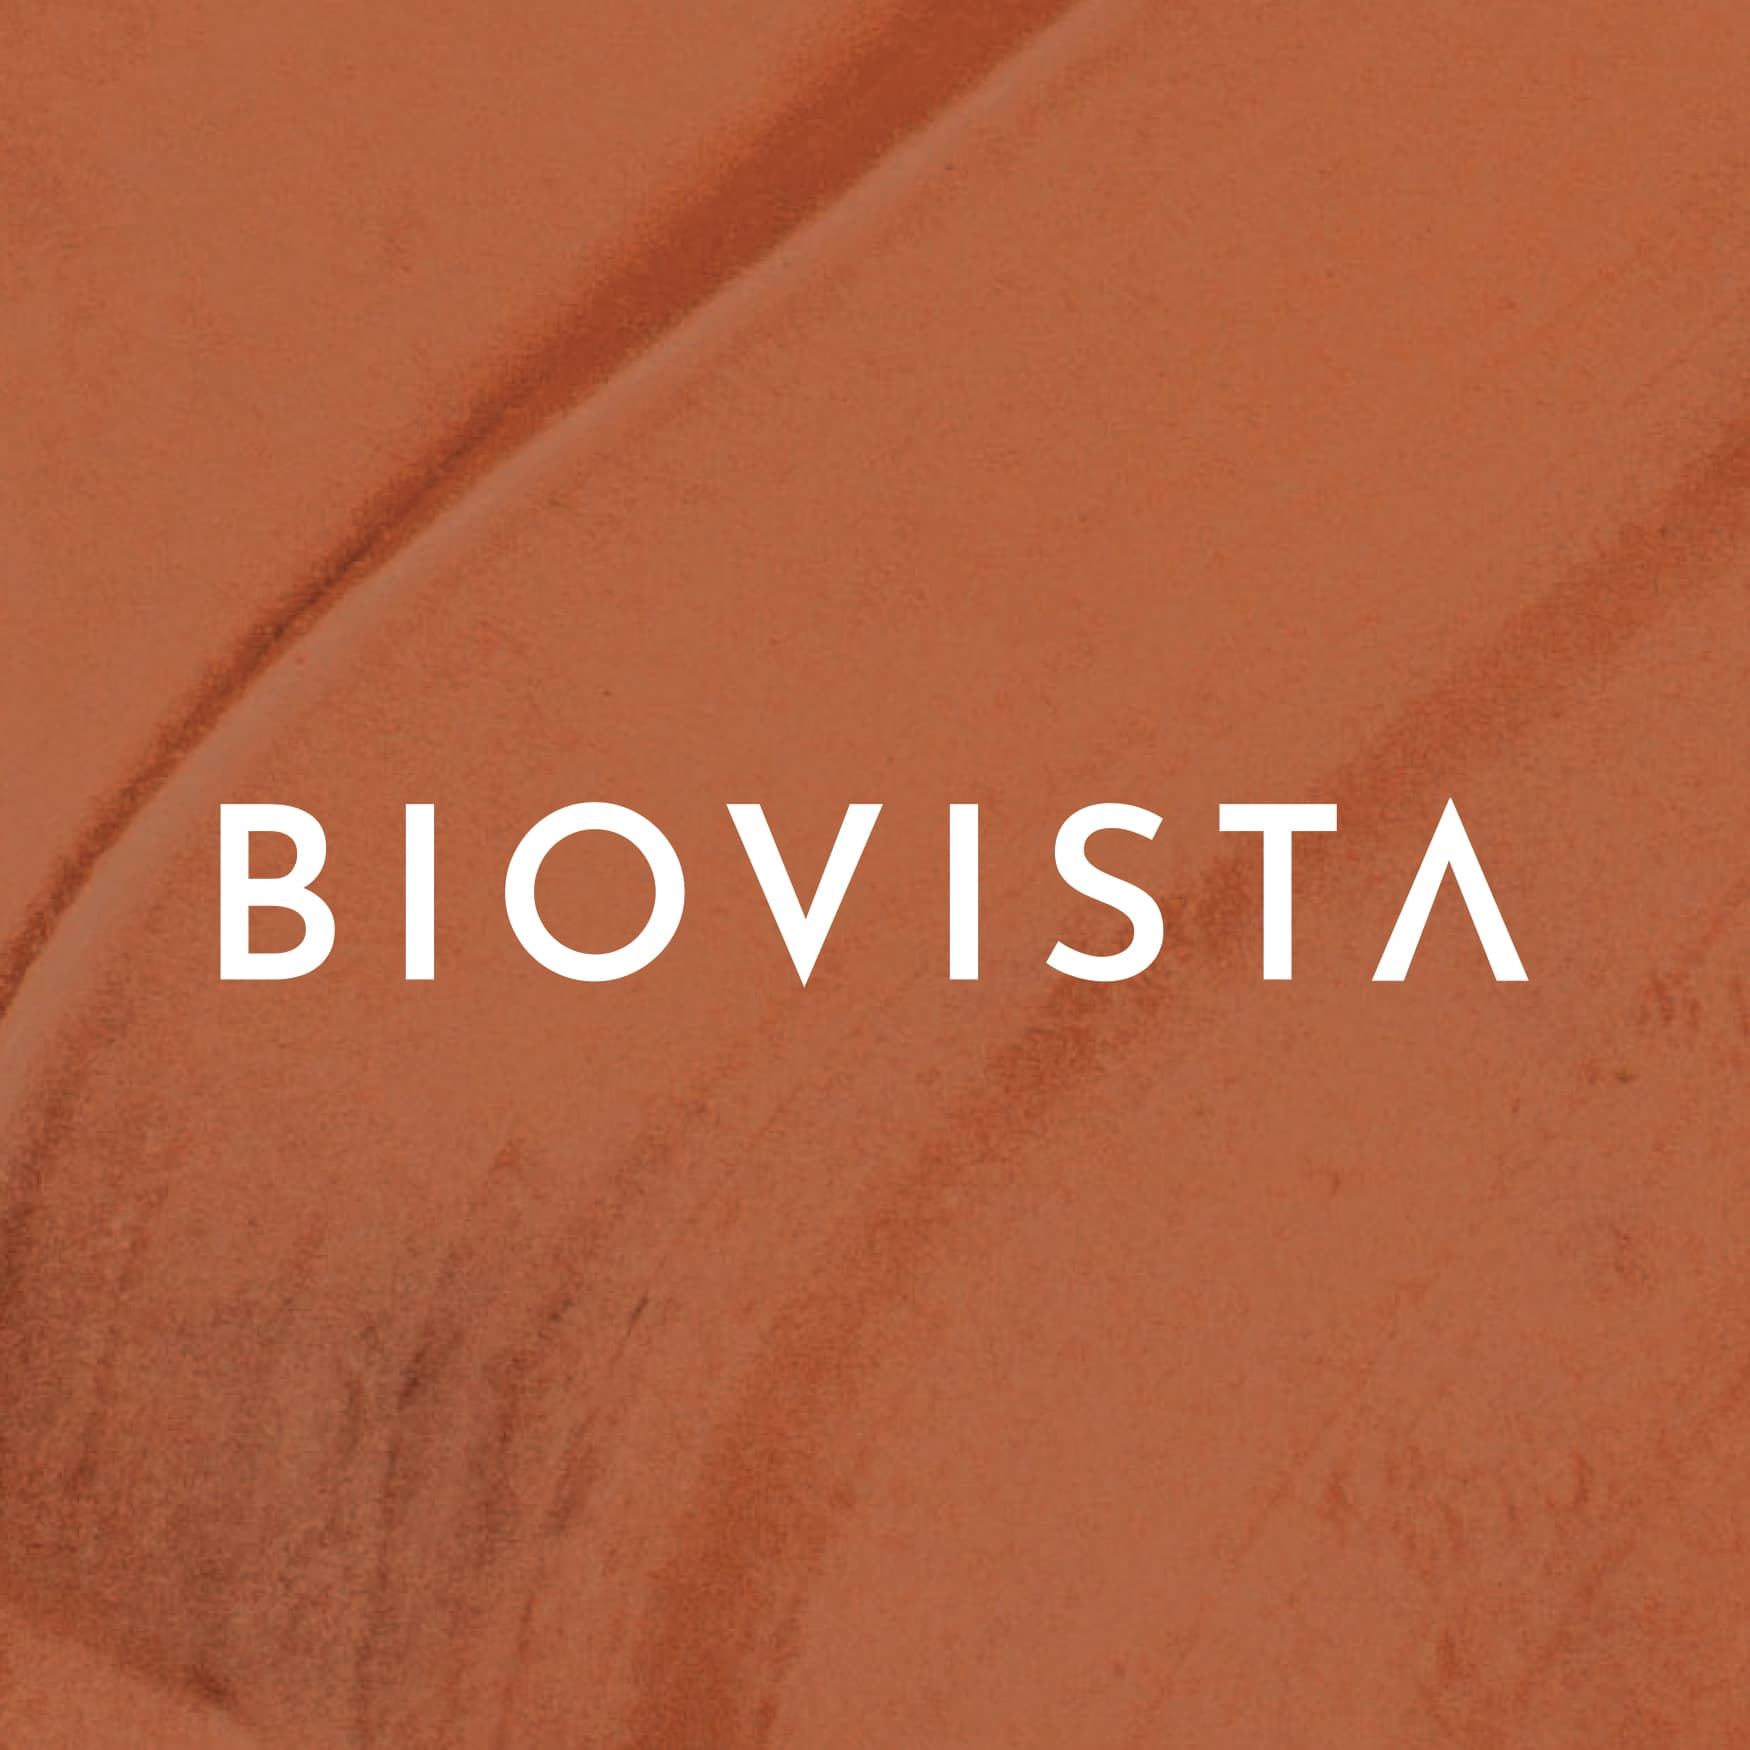 Biovista logo against a burnt orange textured graphic. 